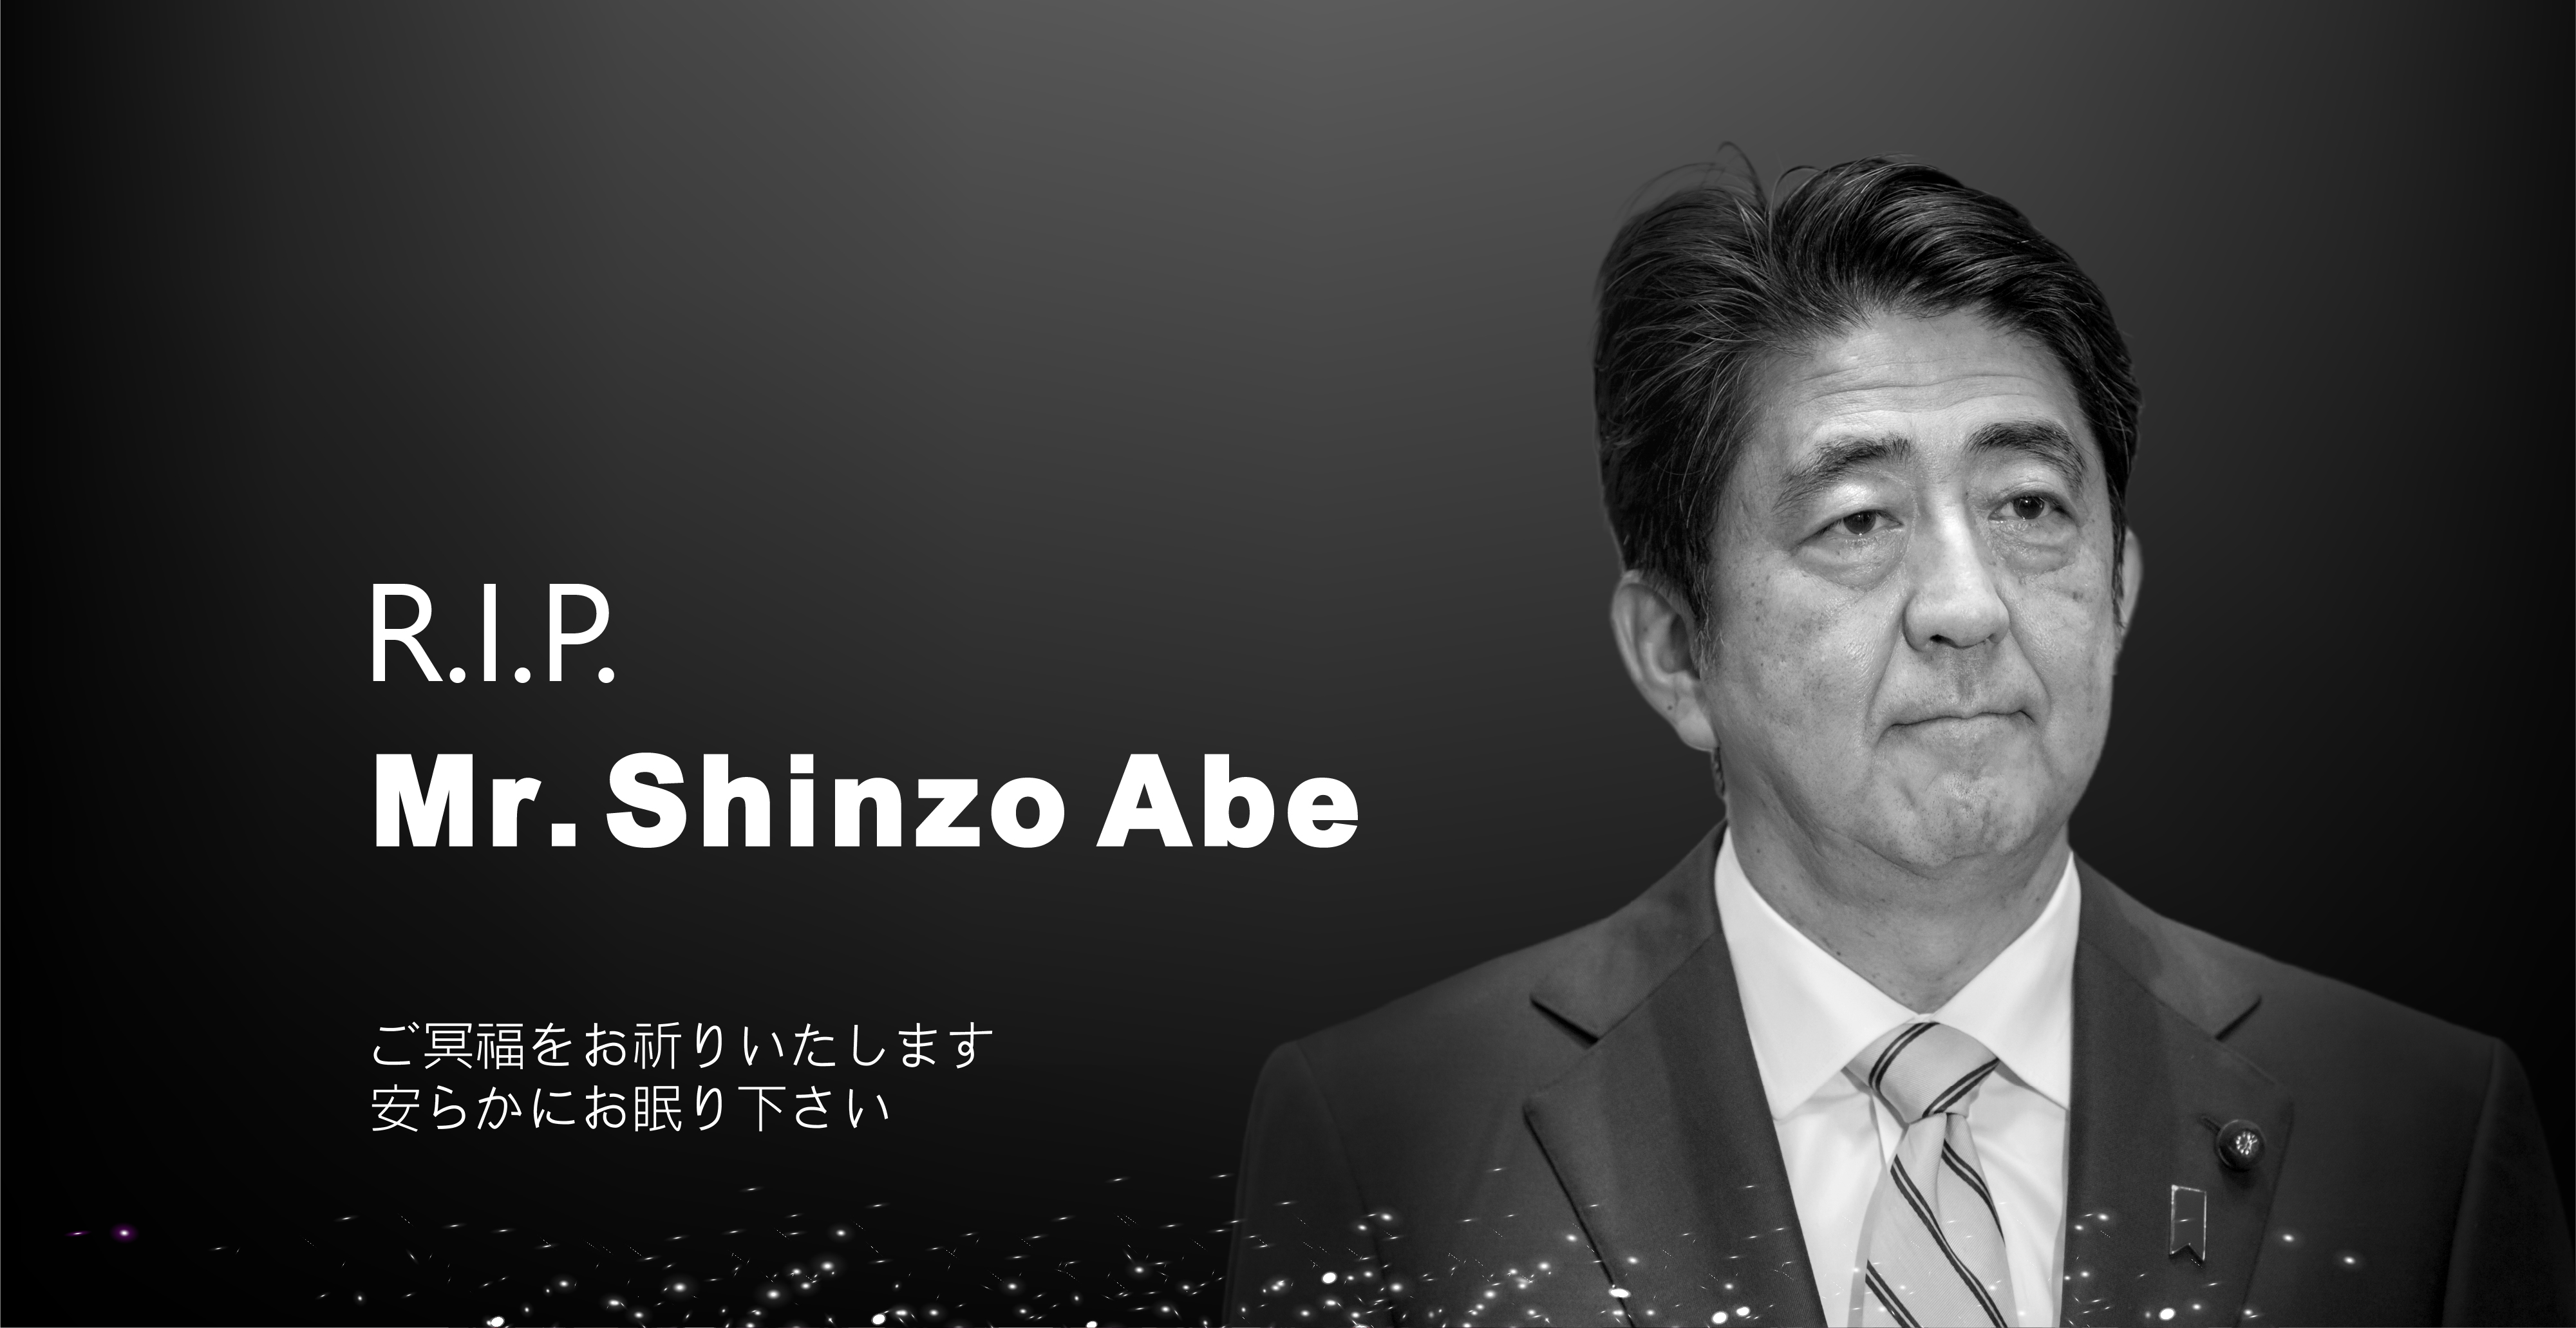 Condolences to Former Japanese Prime Minister Shinzo Abe